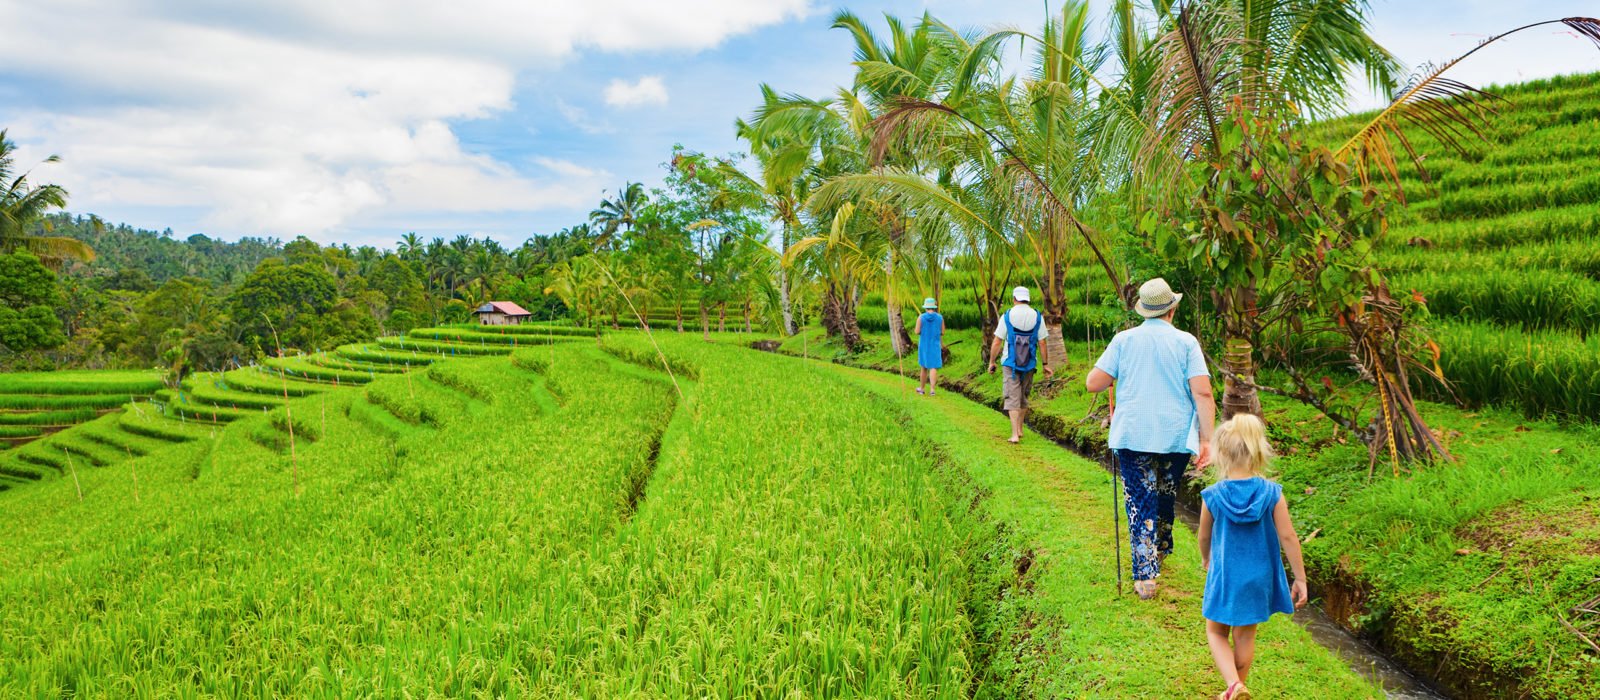 Tourists walking through lush green rice terraces